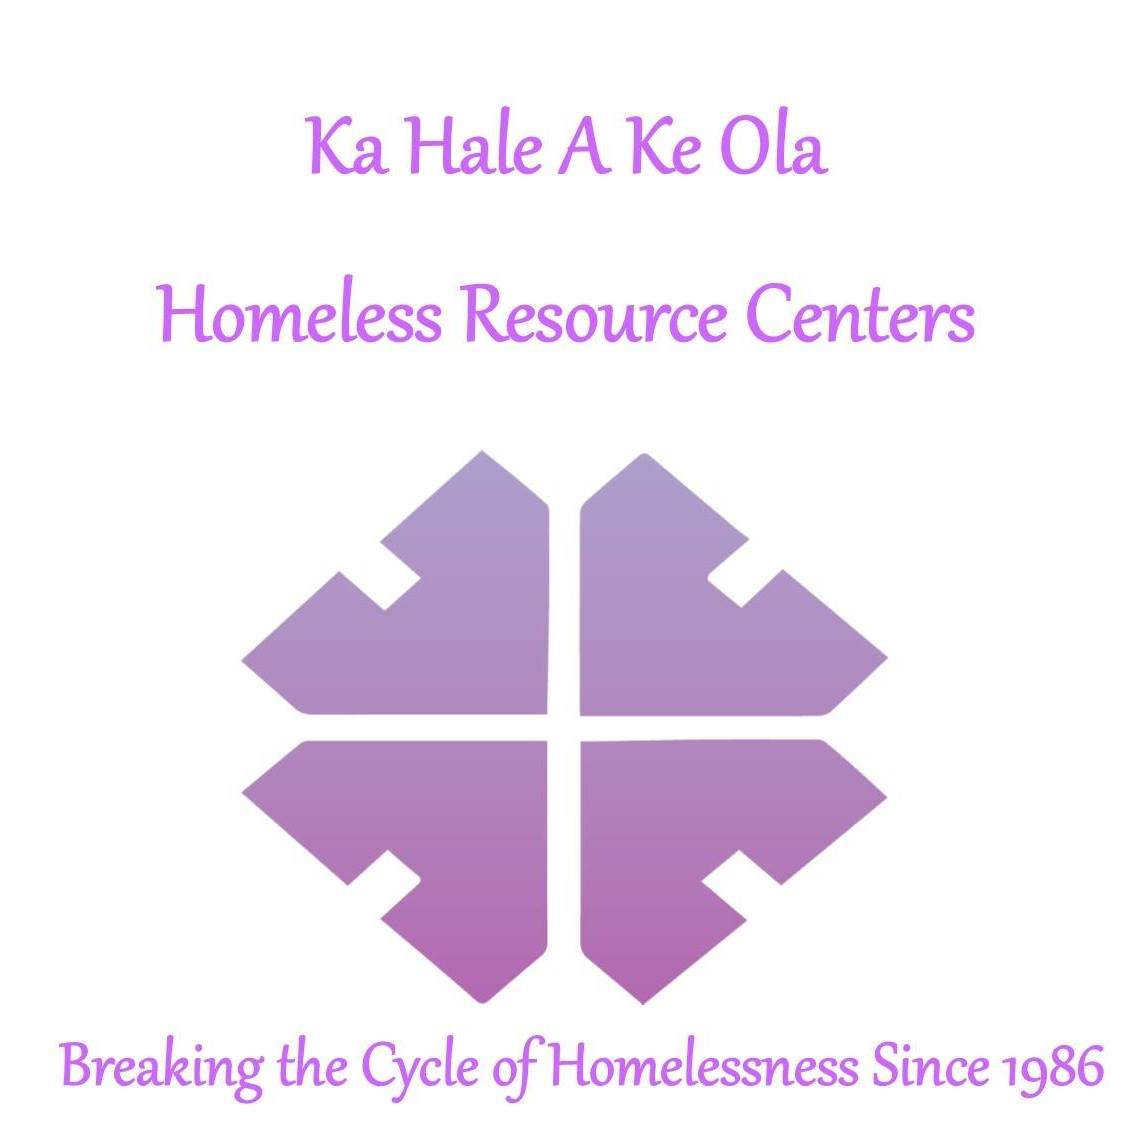 Emergency Shelter and Transitional Housing at Ka Hale A Ke Ola Homeless Resource Centers